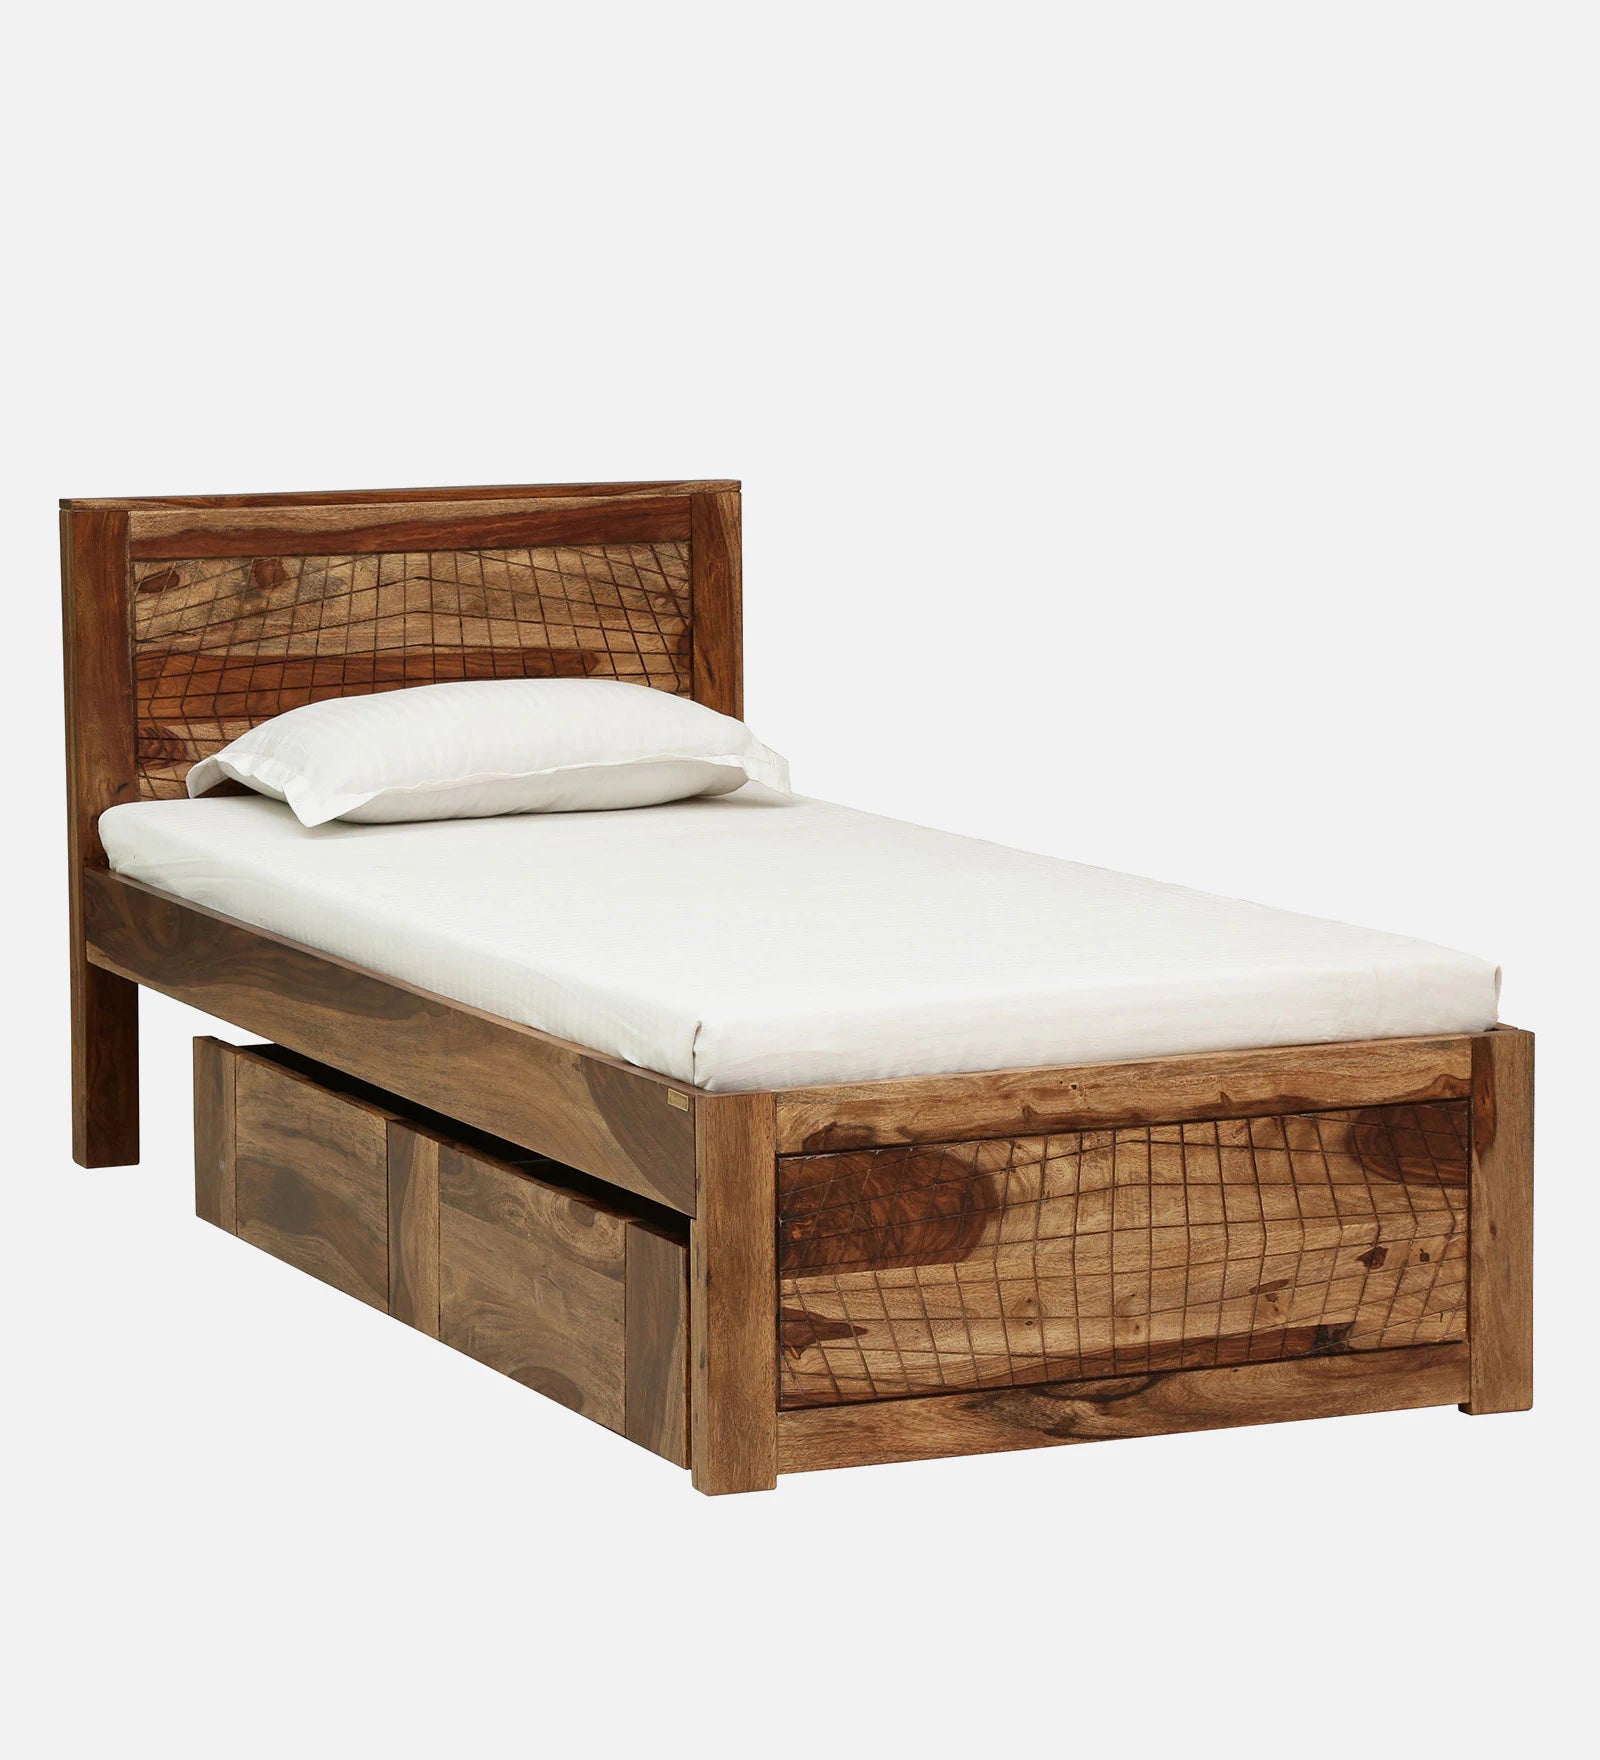 Harmonia Solid Wood Single Bed With Drawer Storage In Rustic Teak Finish By Rajwada - Rajwada Furnish